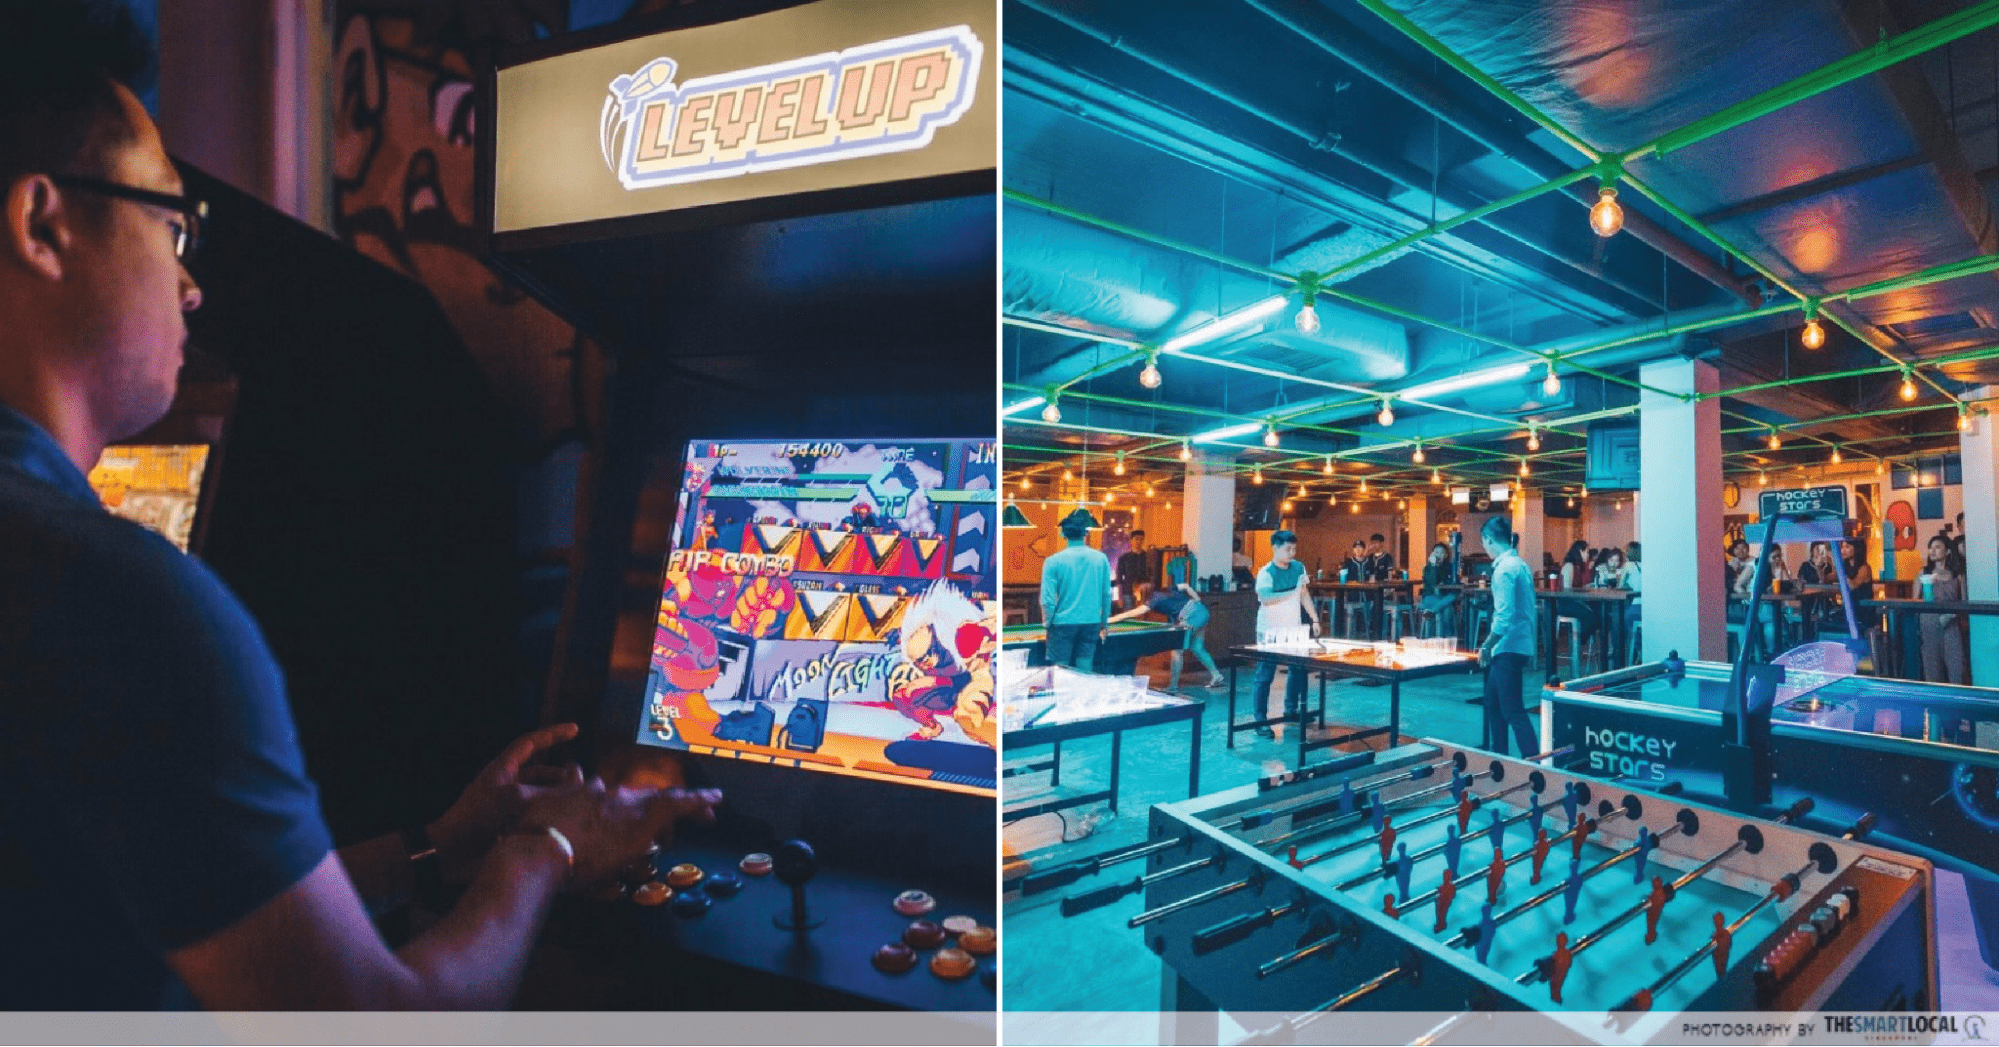 SG Stranger Things - Retro Arcade Bar Level Up